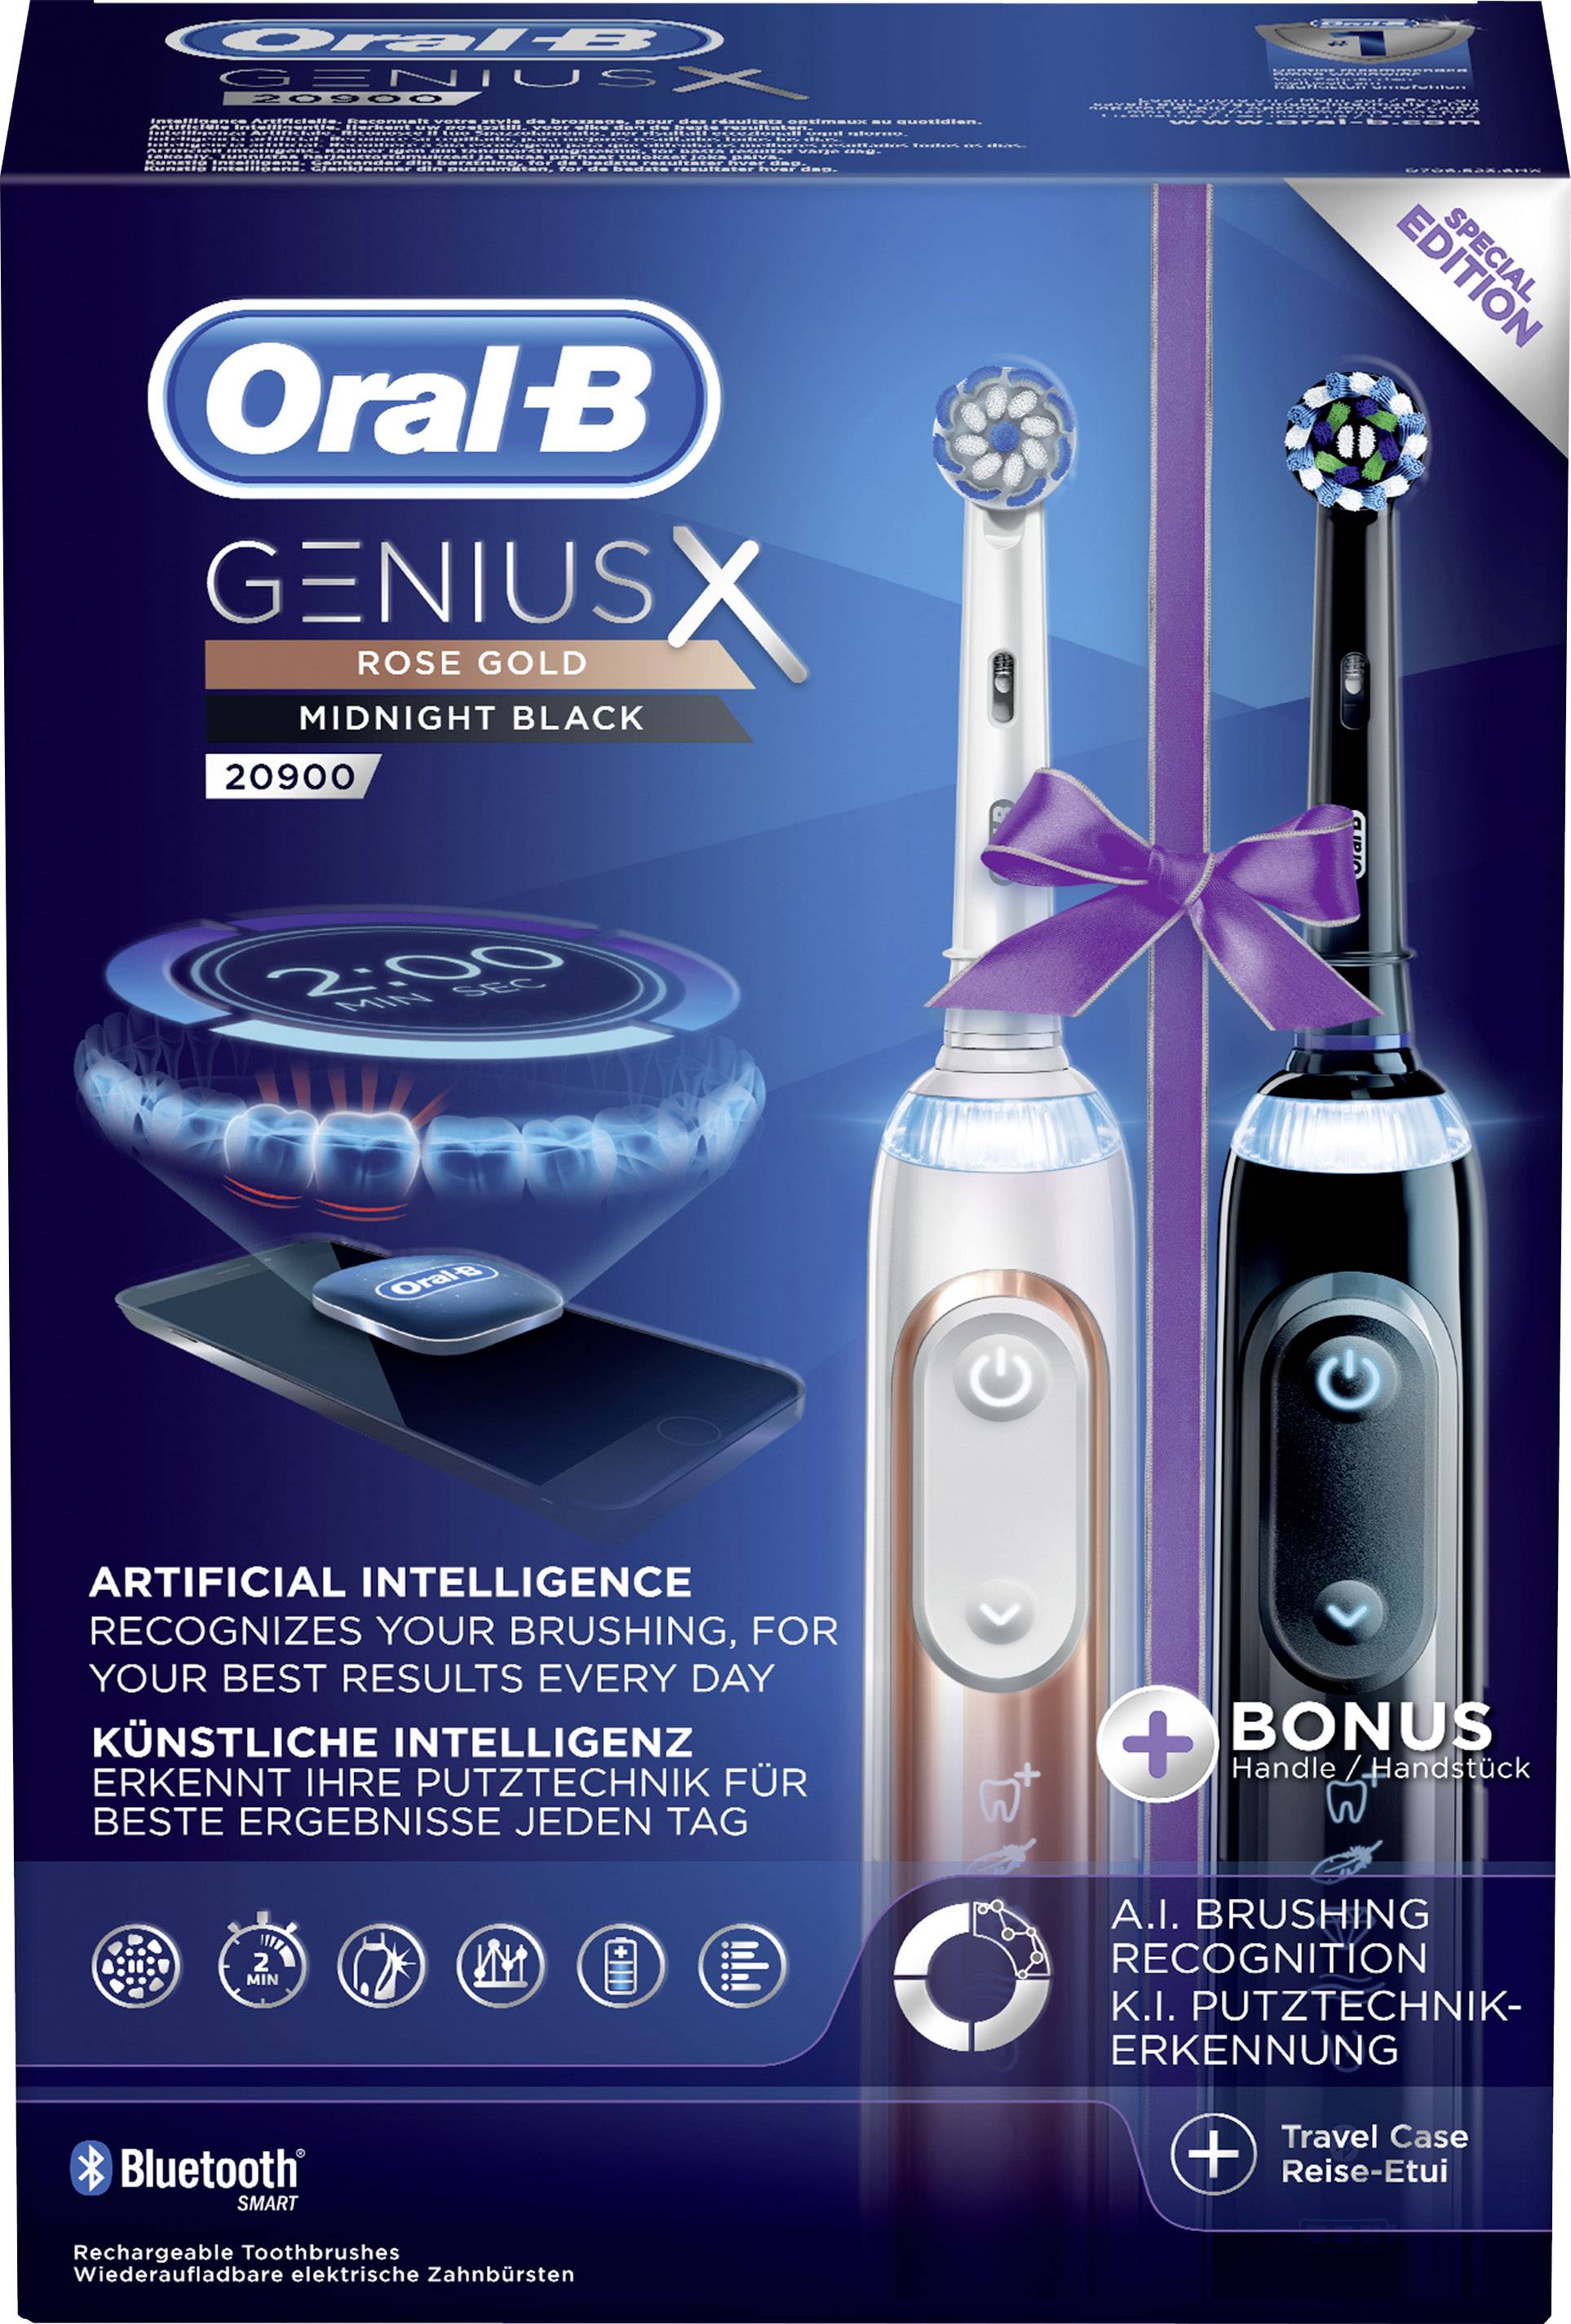 Slaapkamer blijven leven Oral-B Genius X 20900 Duo black/rosegold Elektrische tandenborstel Roterend  / oscillerend / pulserend Rose gold, Midnigh | Conrad.be